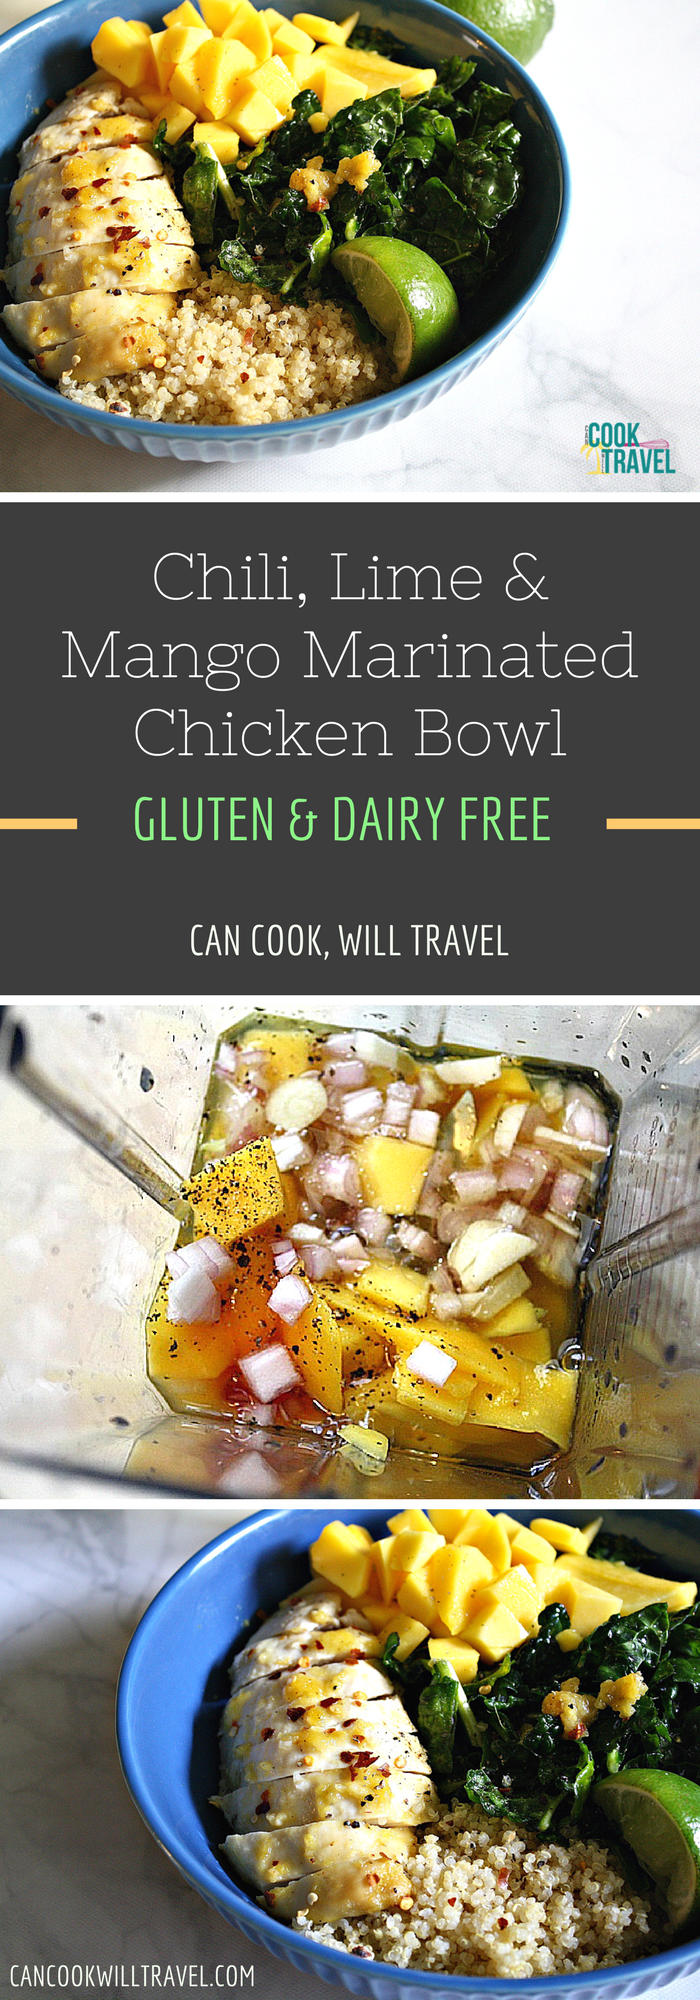 Mango Marinated Chicken Bowl_Collage2